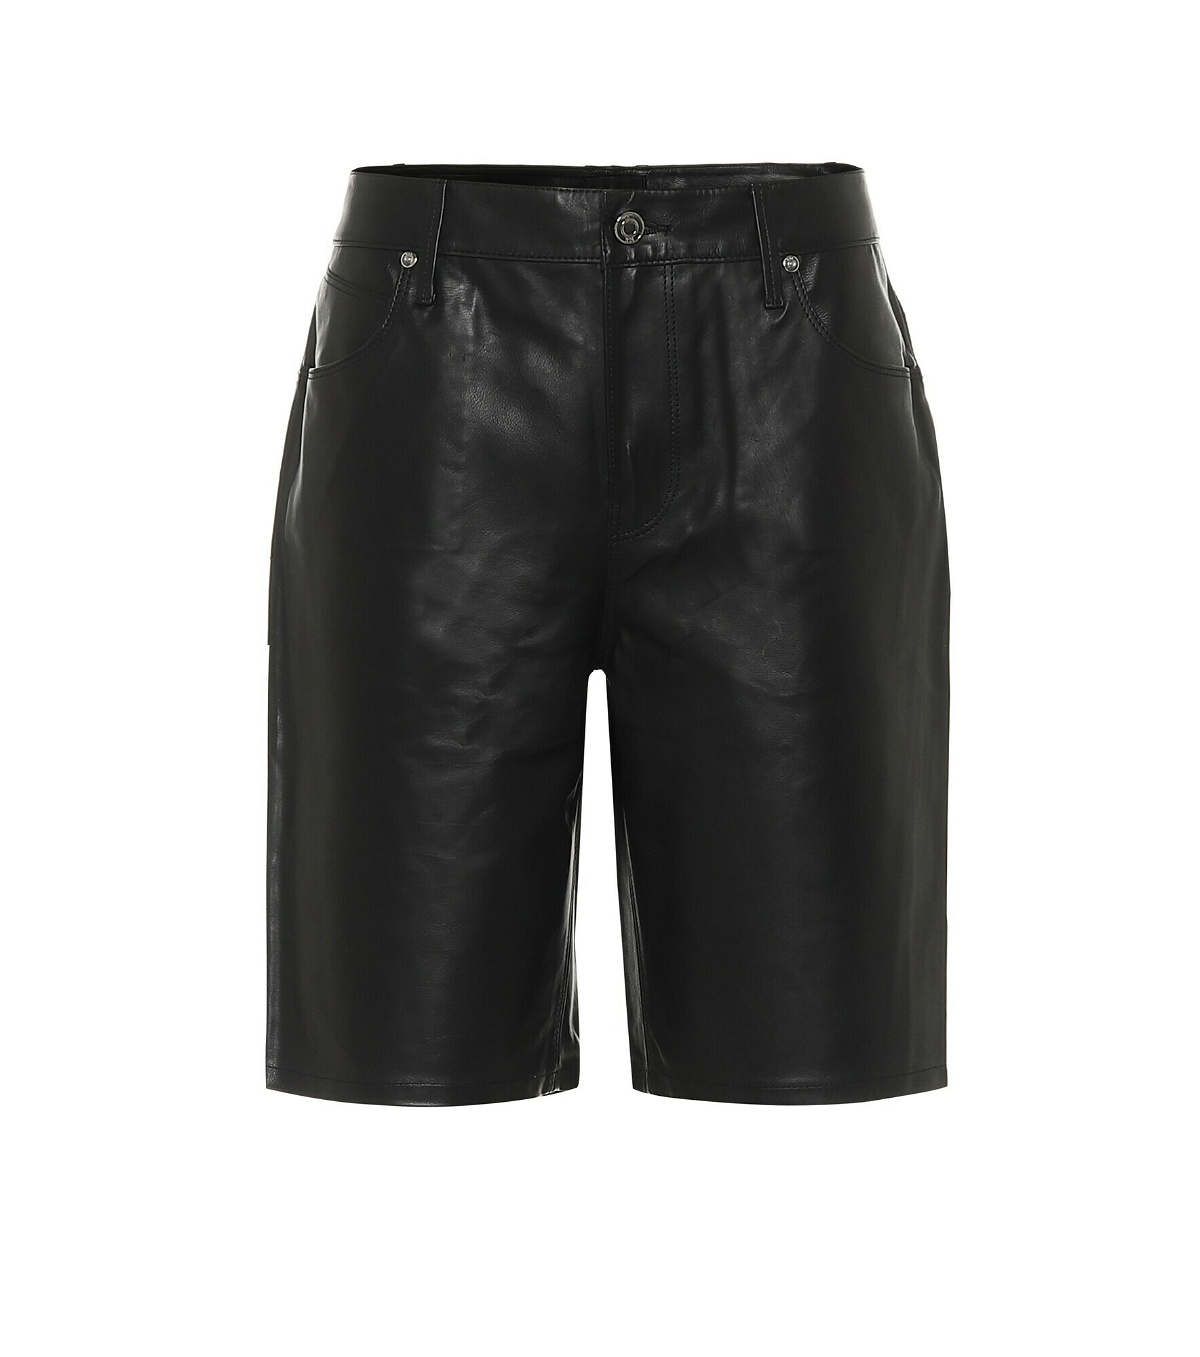 Rta - Jami leather shorts RtA